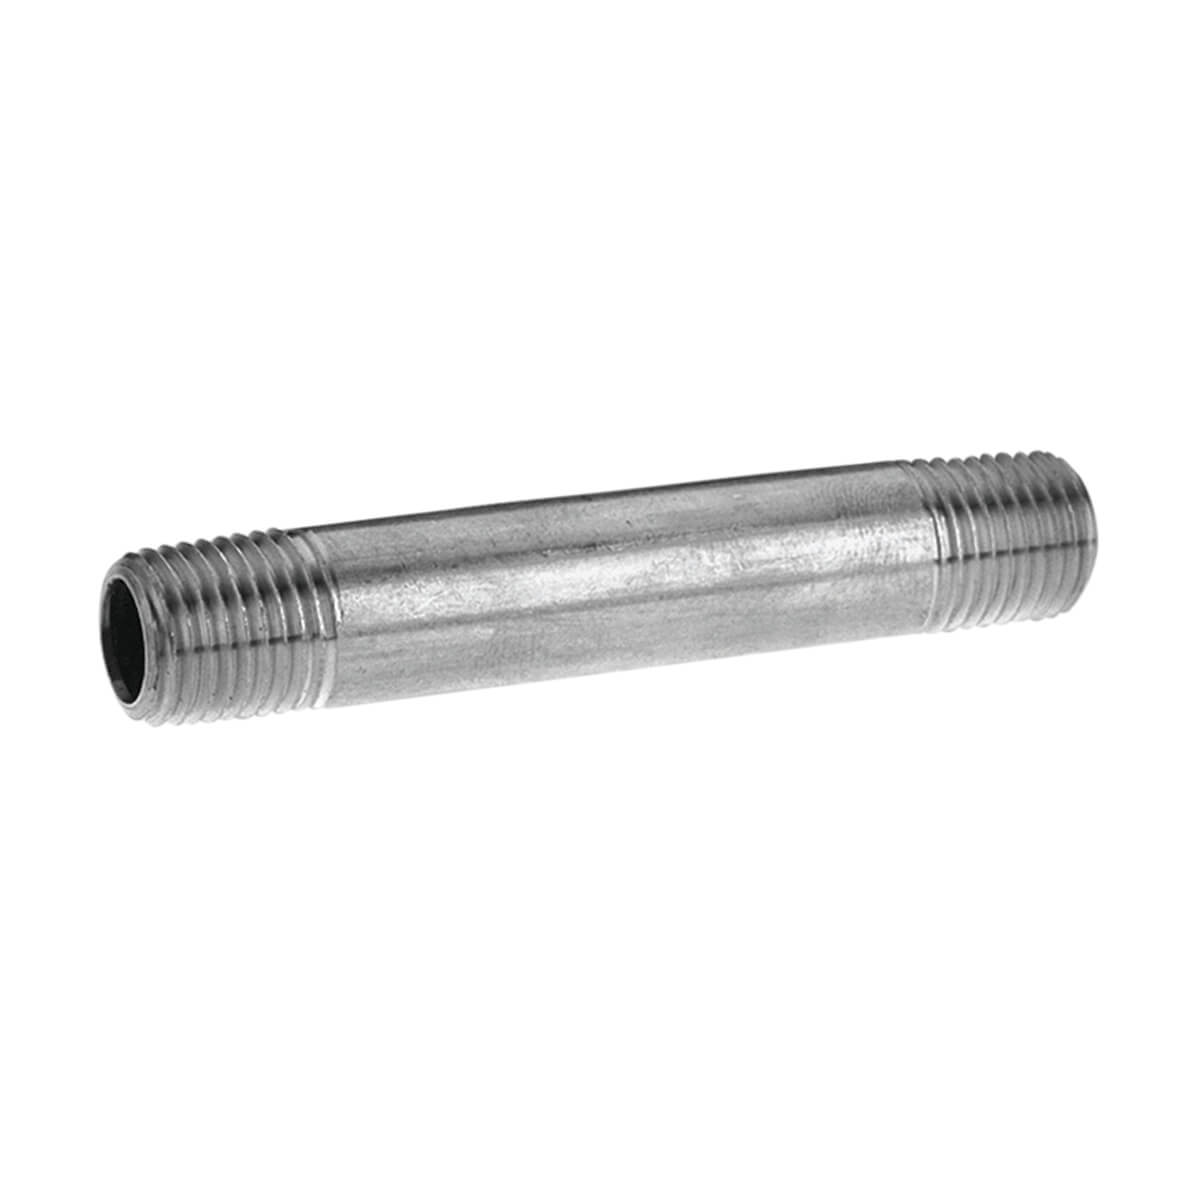 Pipe Nipple Galvanized Steel - 1-in x 36-in